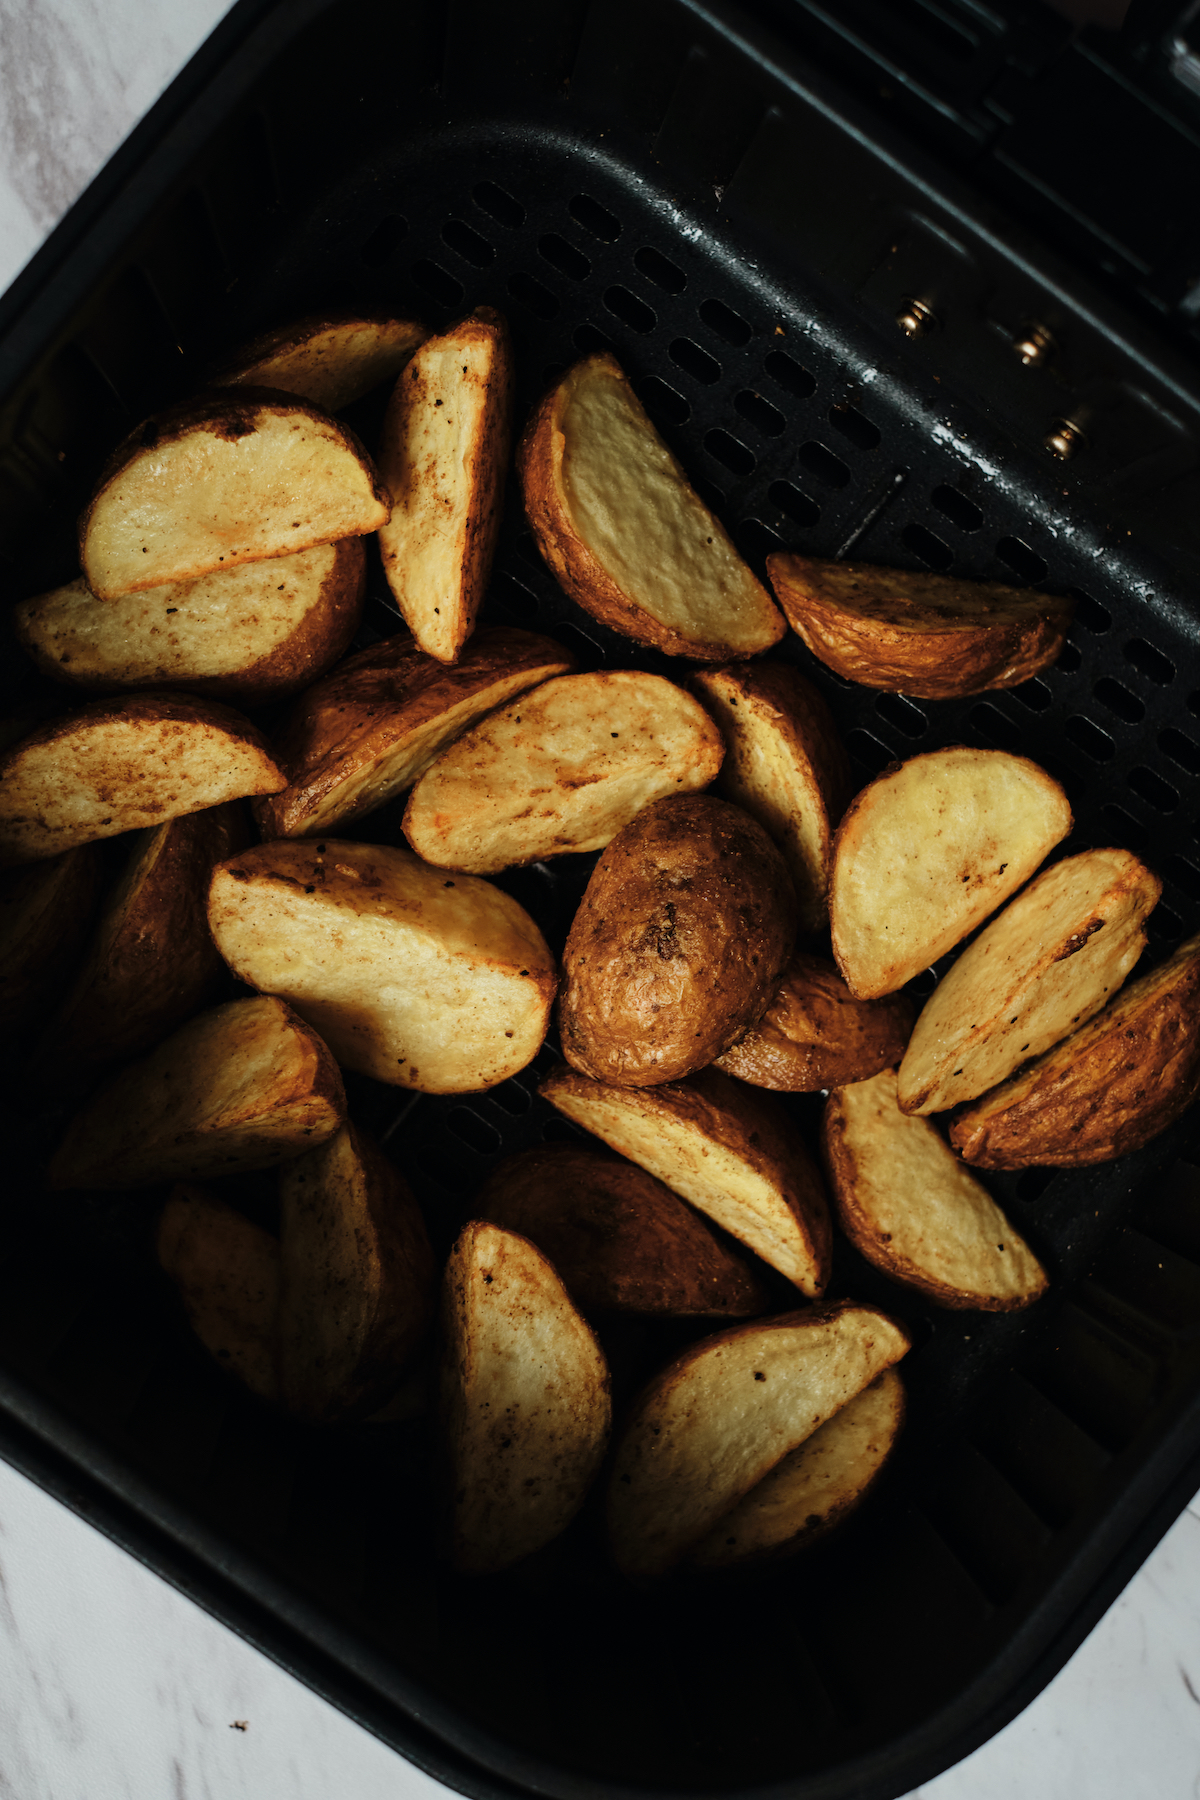 the finished crispy potato wedges inside the air fryer basket